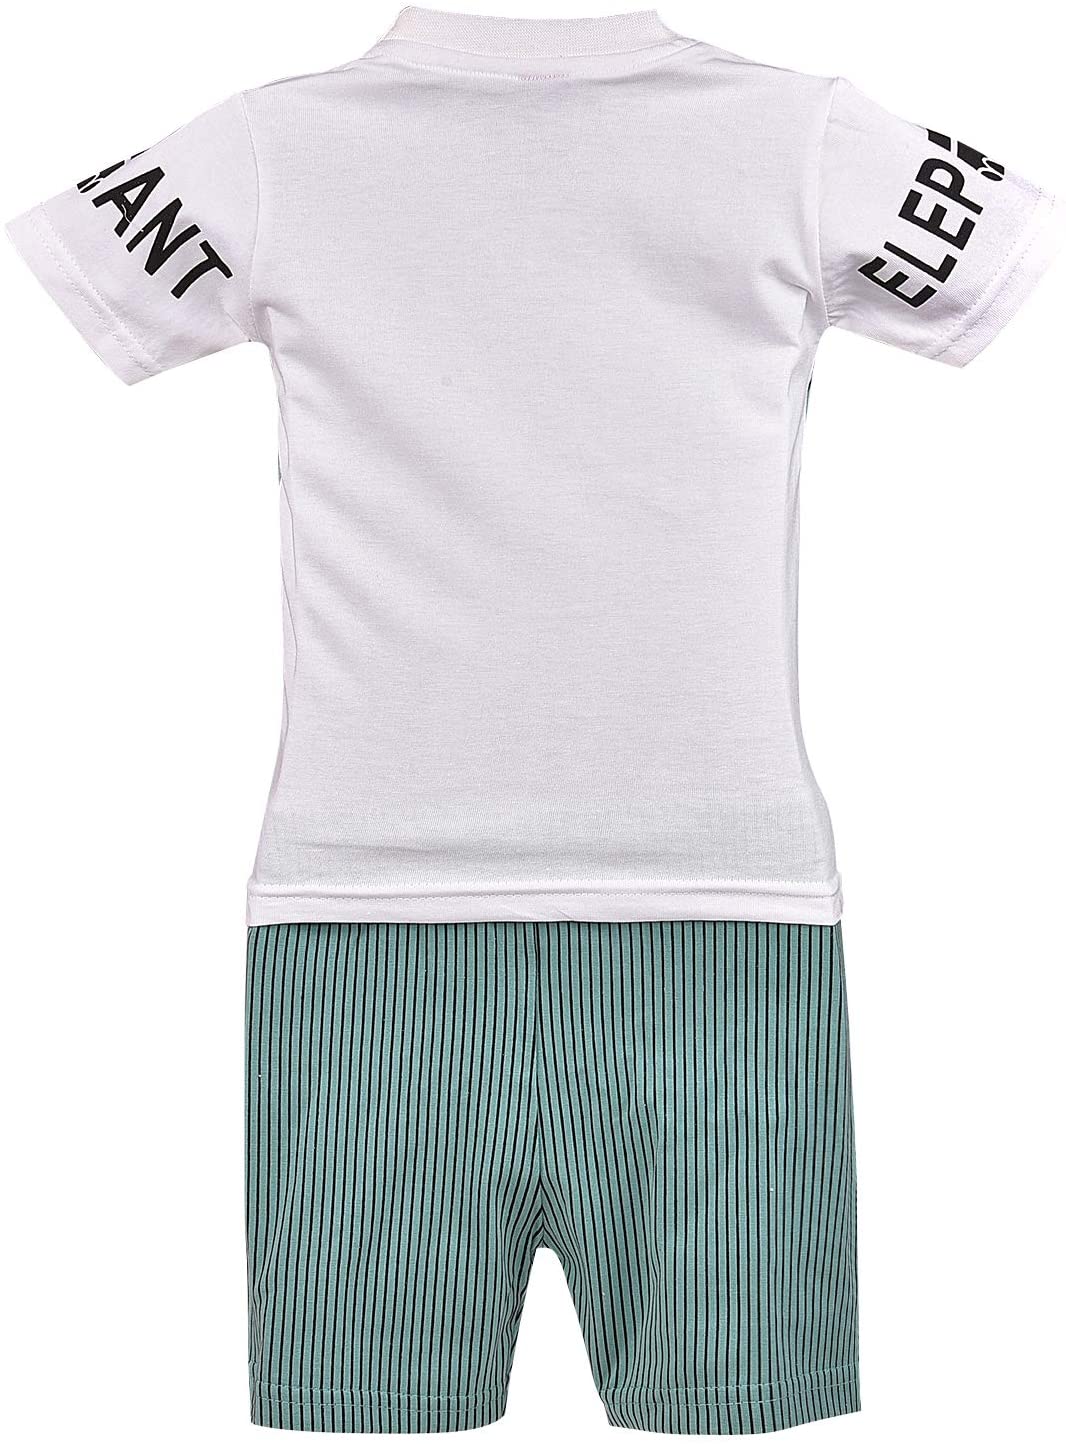 Wish Karo Unisex Clothing Sets for Boys & Baby Girls-(bt19grn)